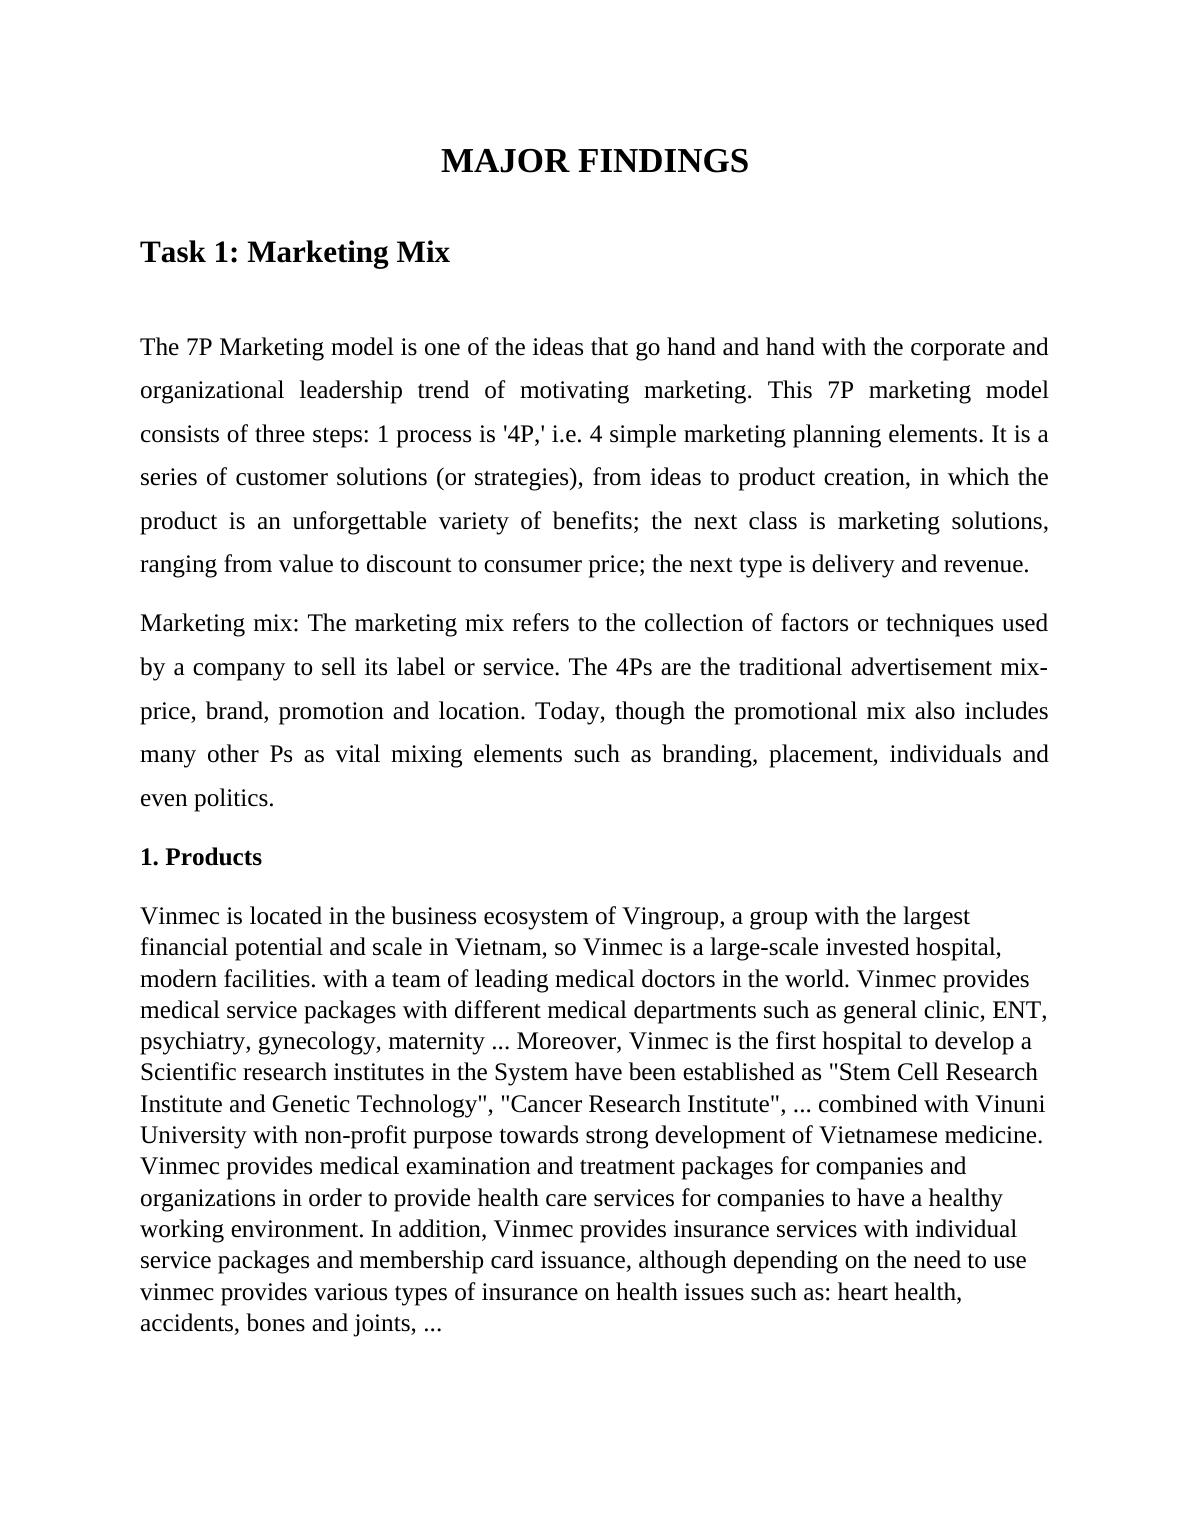 Marketing Mix Assignment Solution_4